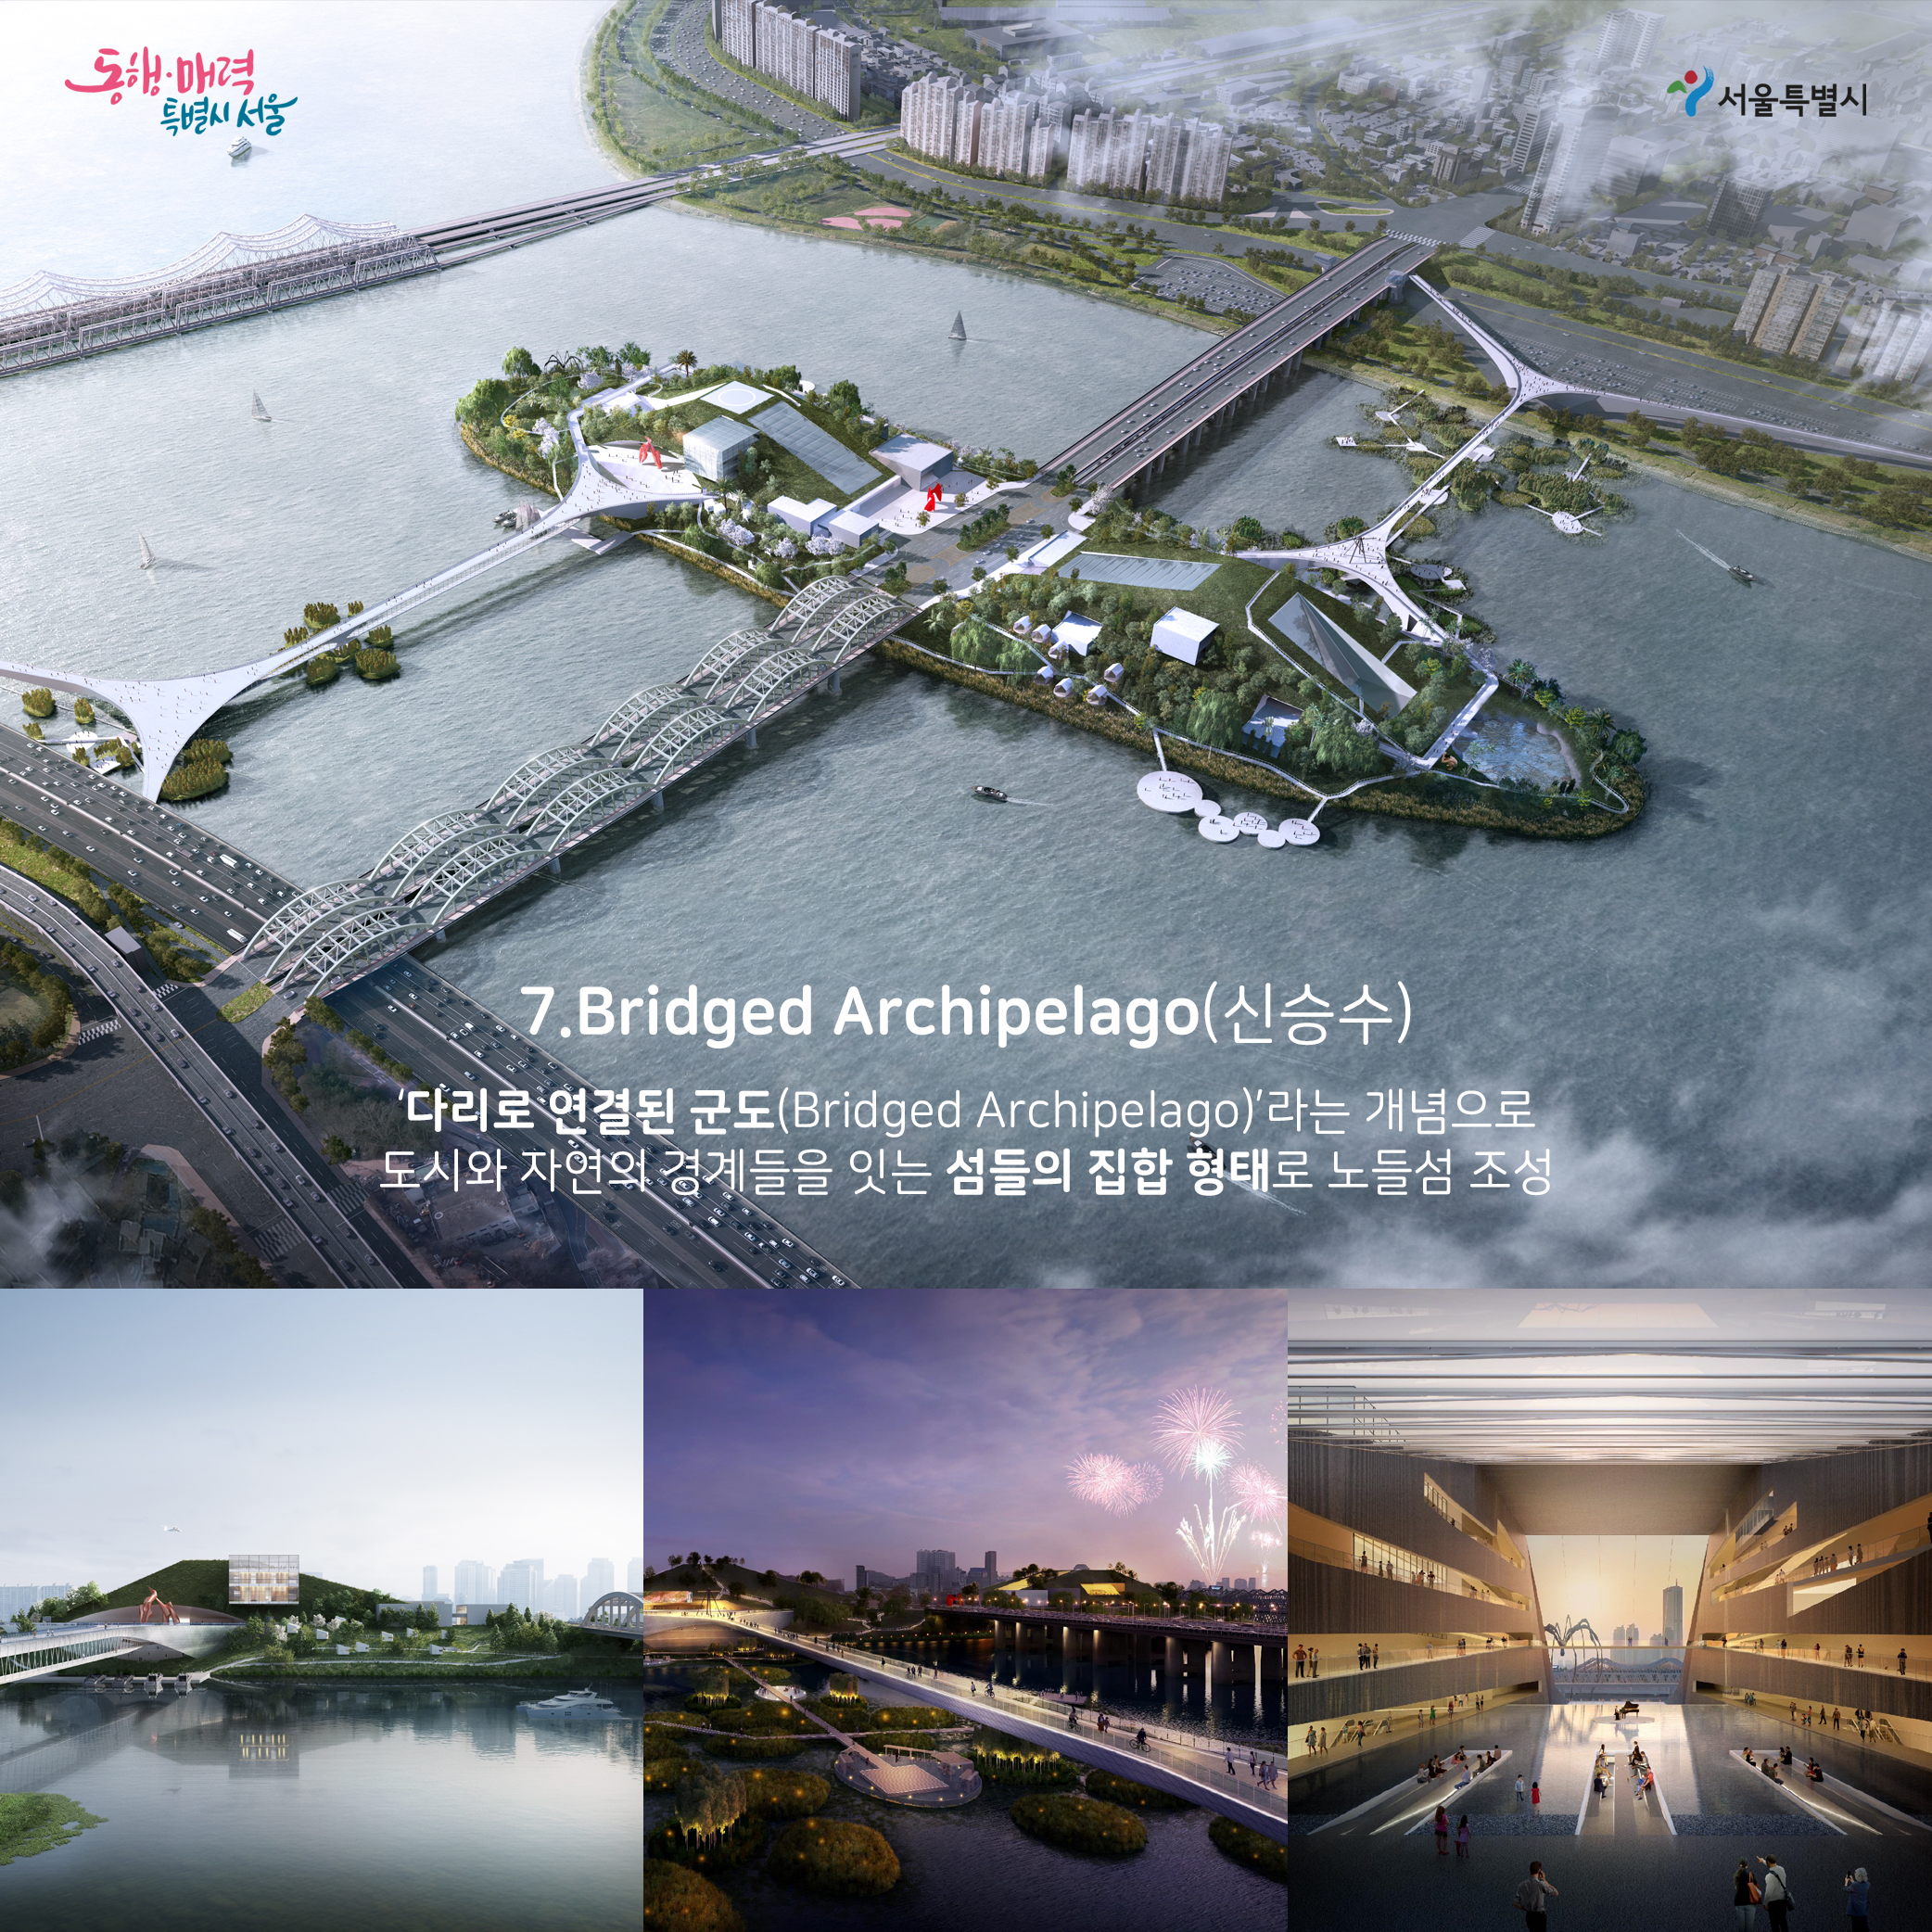 7.Bridge Archipelago(신승수):다리로 연결된 군도(Bridged Archipealago)라는 개념으로 도시와 자연의 경계들을 잇는 섬들의 집합 형태로 노들섬 조성